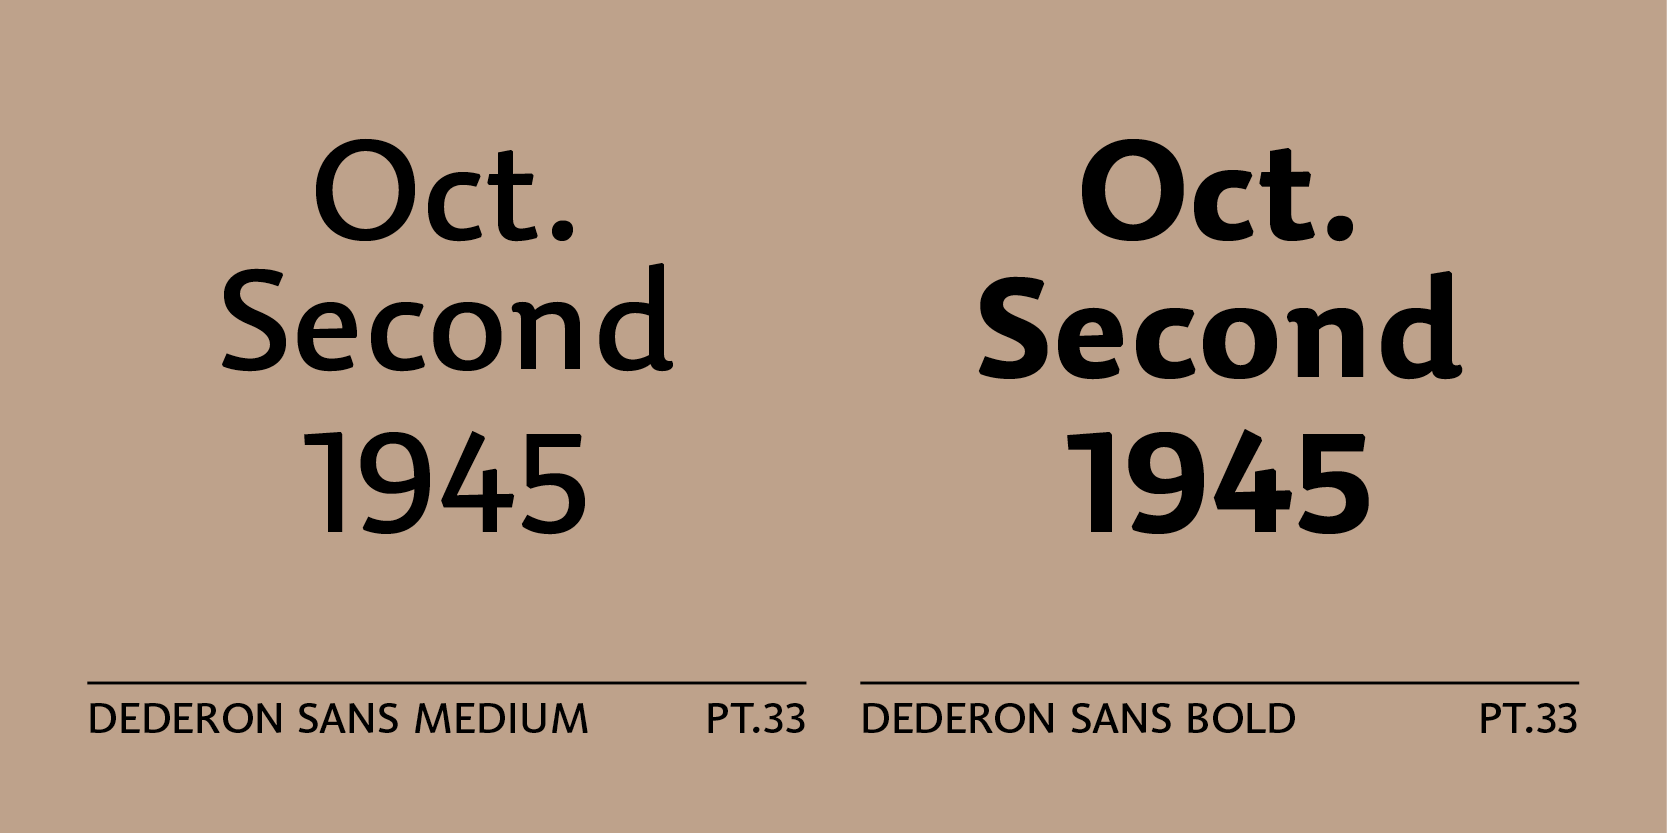 Card displaying Dederon Sans typeface in various styles